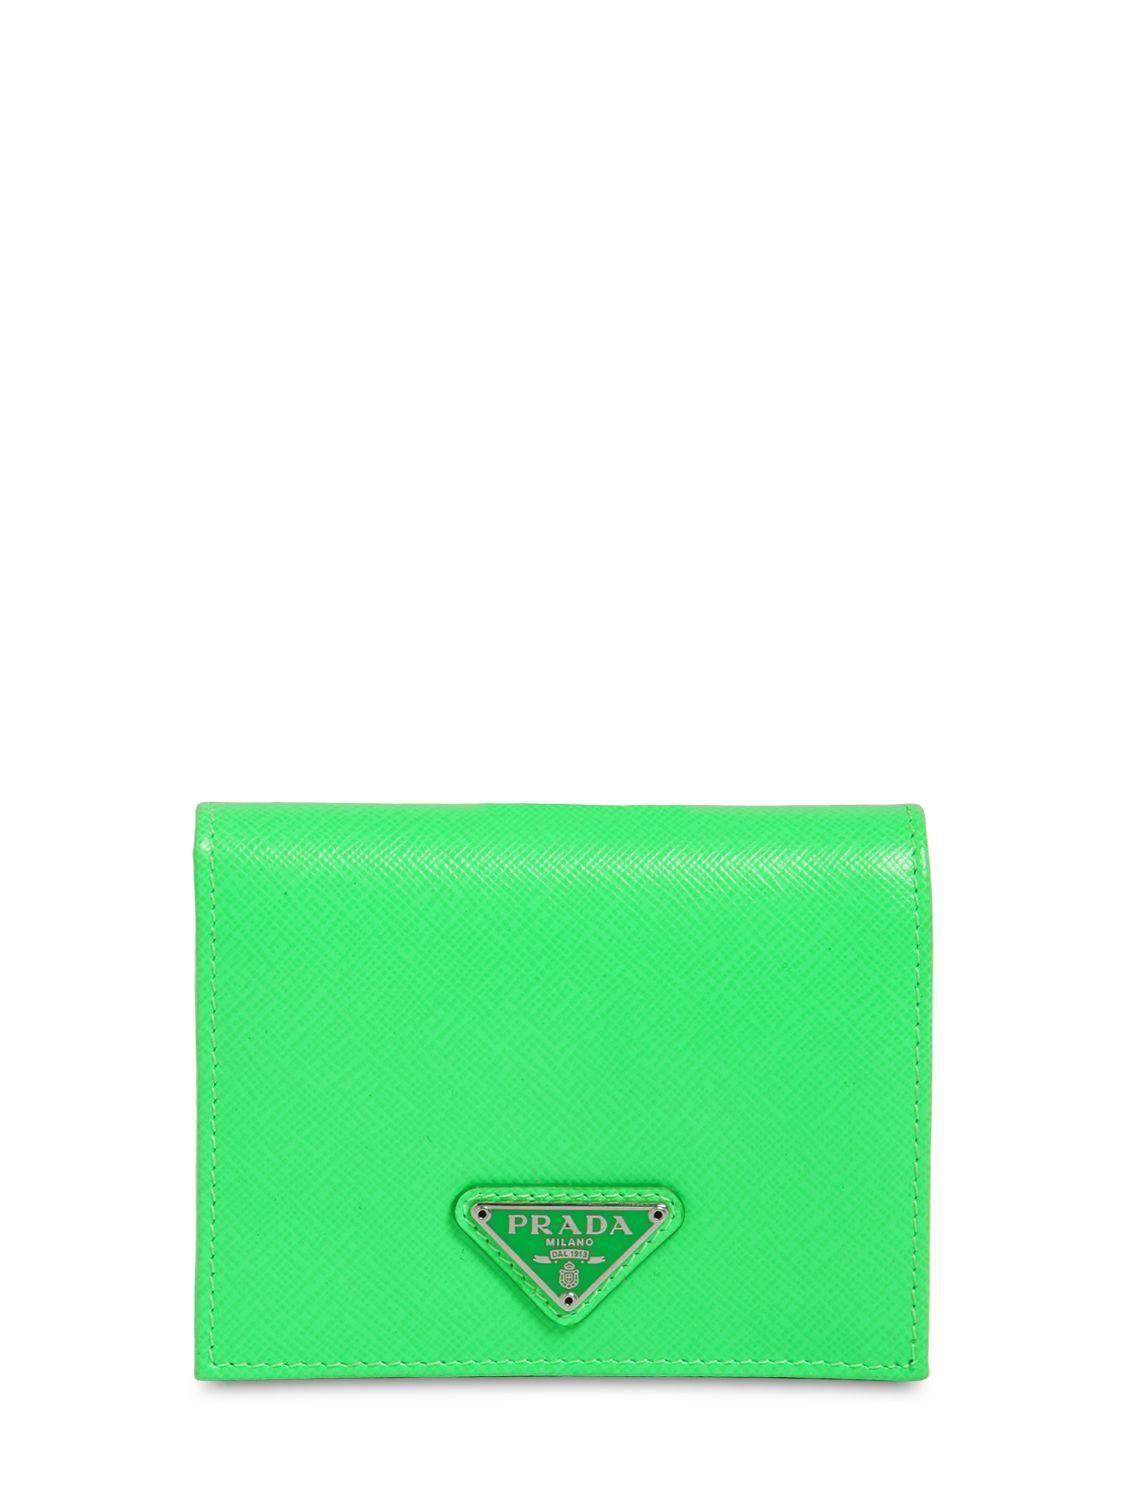 Green Triangle Logo - LogoDix